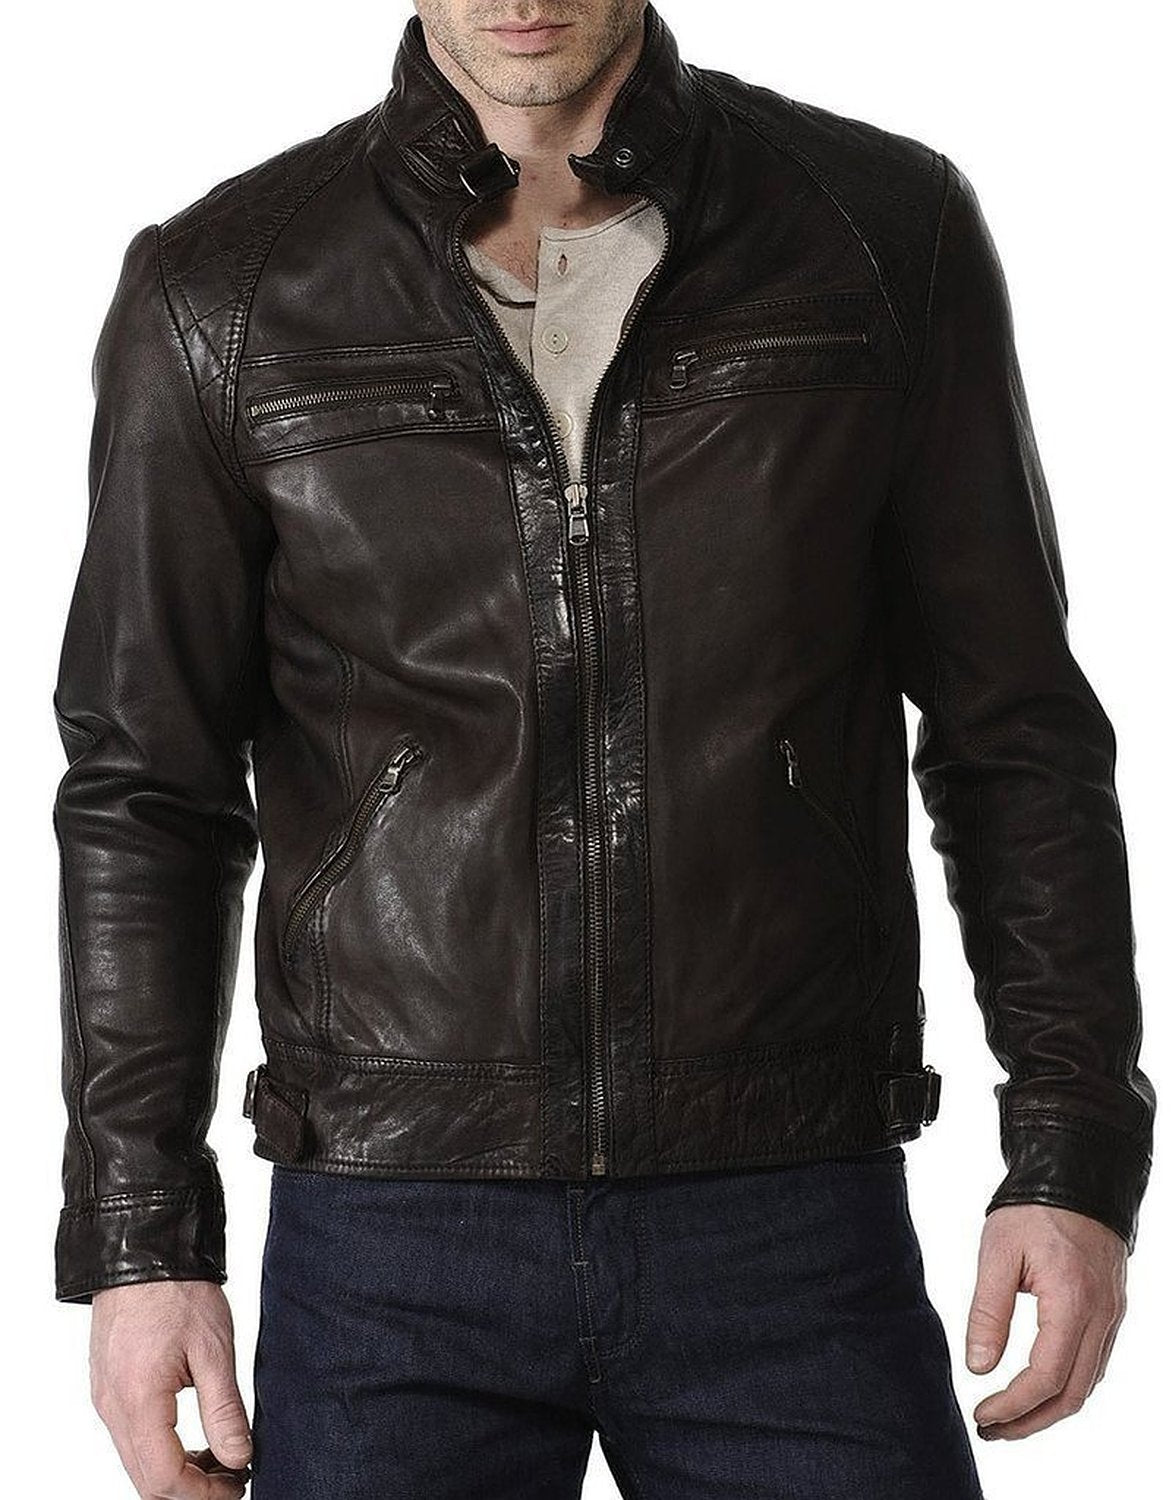 Leather Jackets Hub Mens Genuine Lambskin Leather Jacket (Black, Racer Jacket) - 1501018